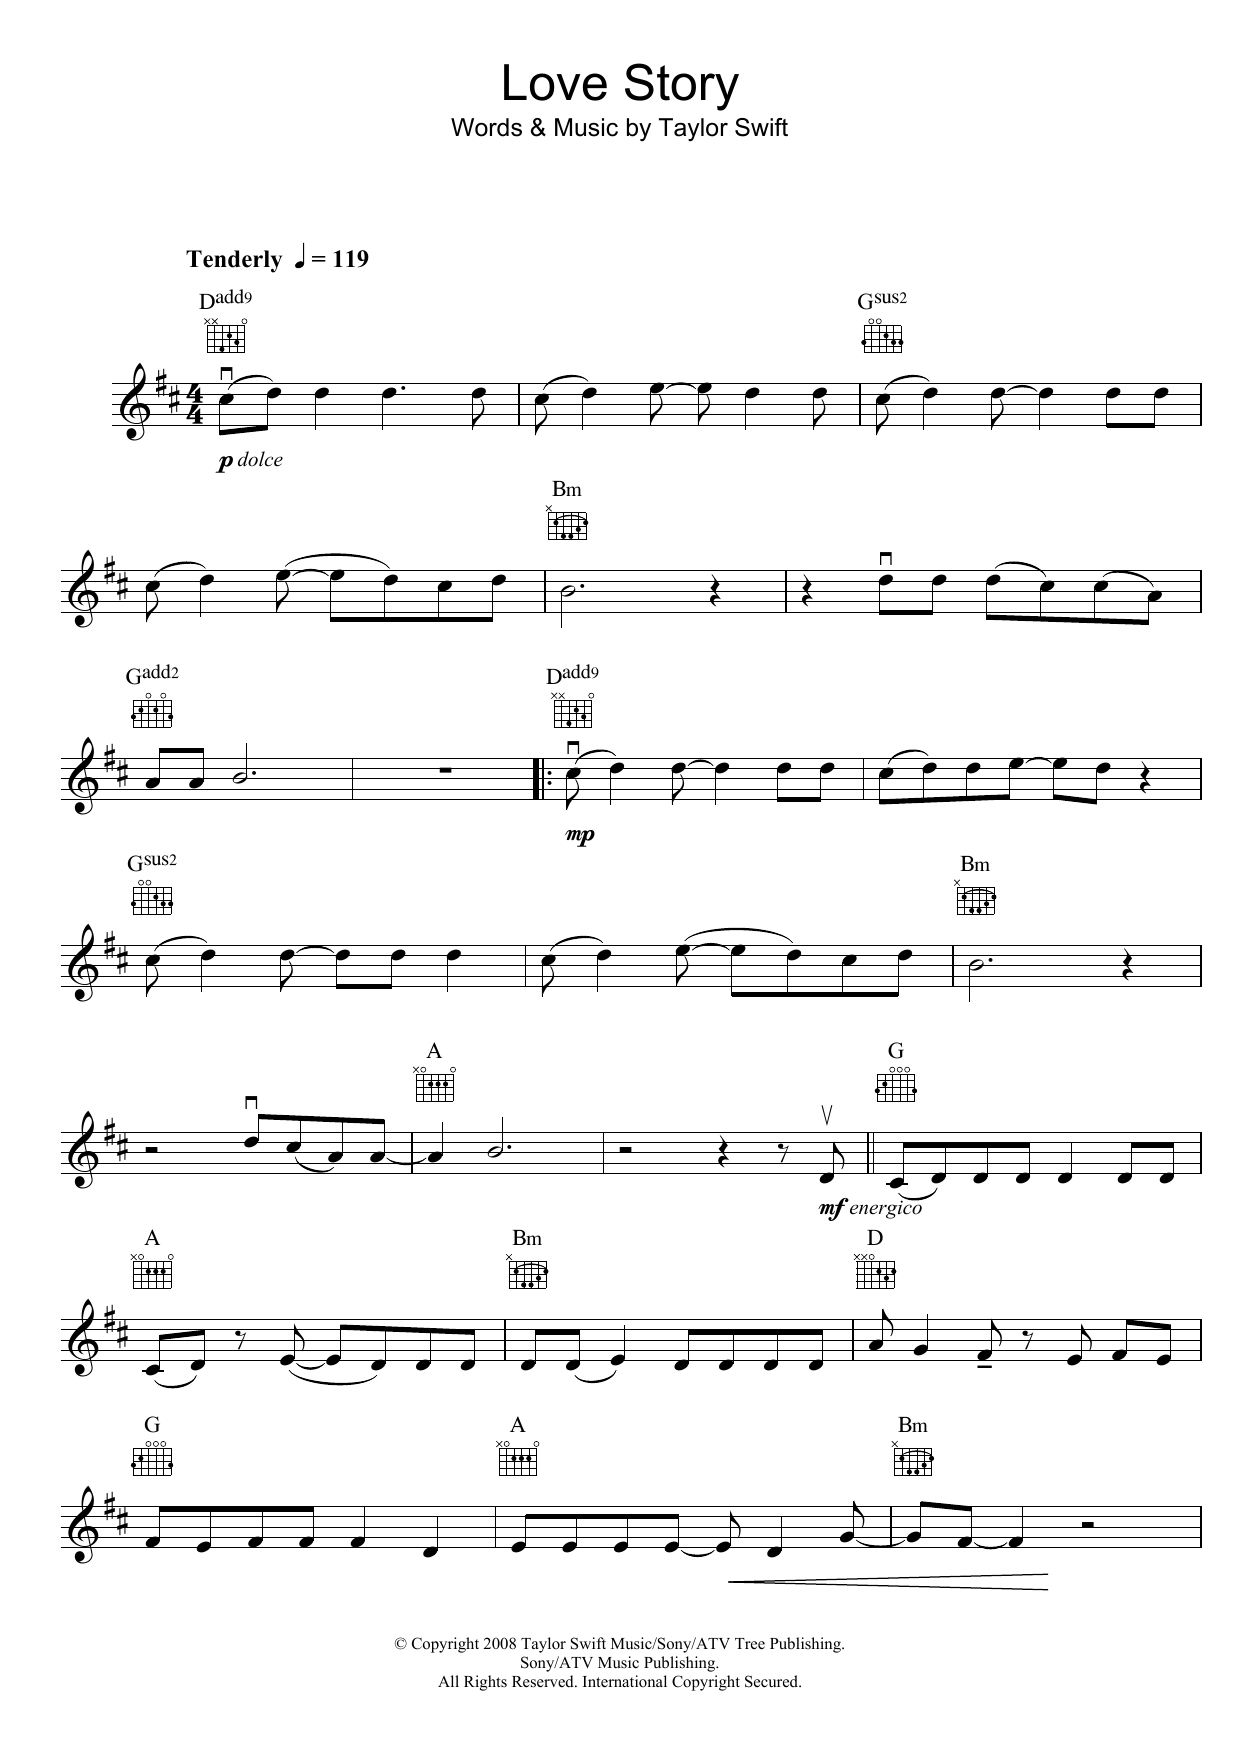 Love Story Sheet Music | Taylor Swift | Violin Solo - Taylor Swift Mine Piano Sheet Music Free Printable